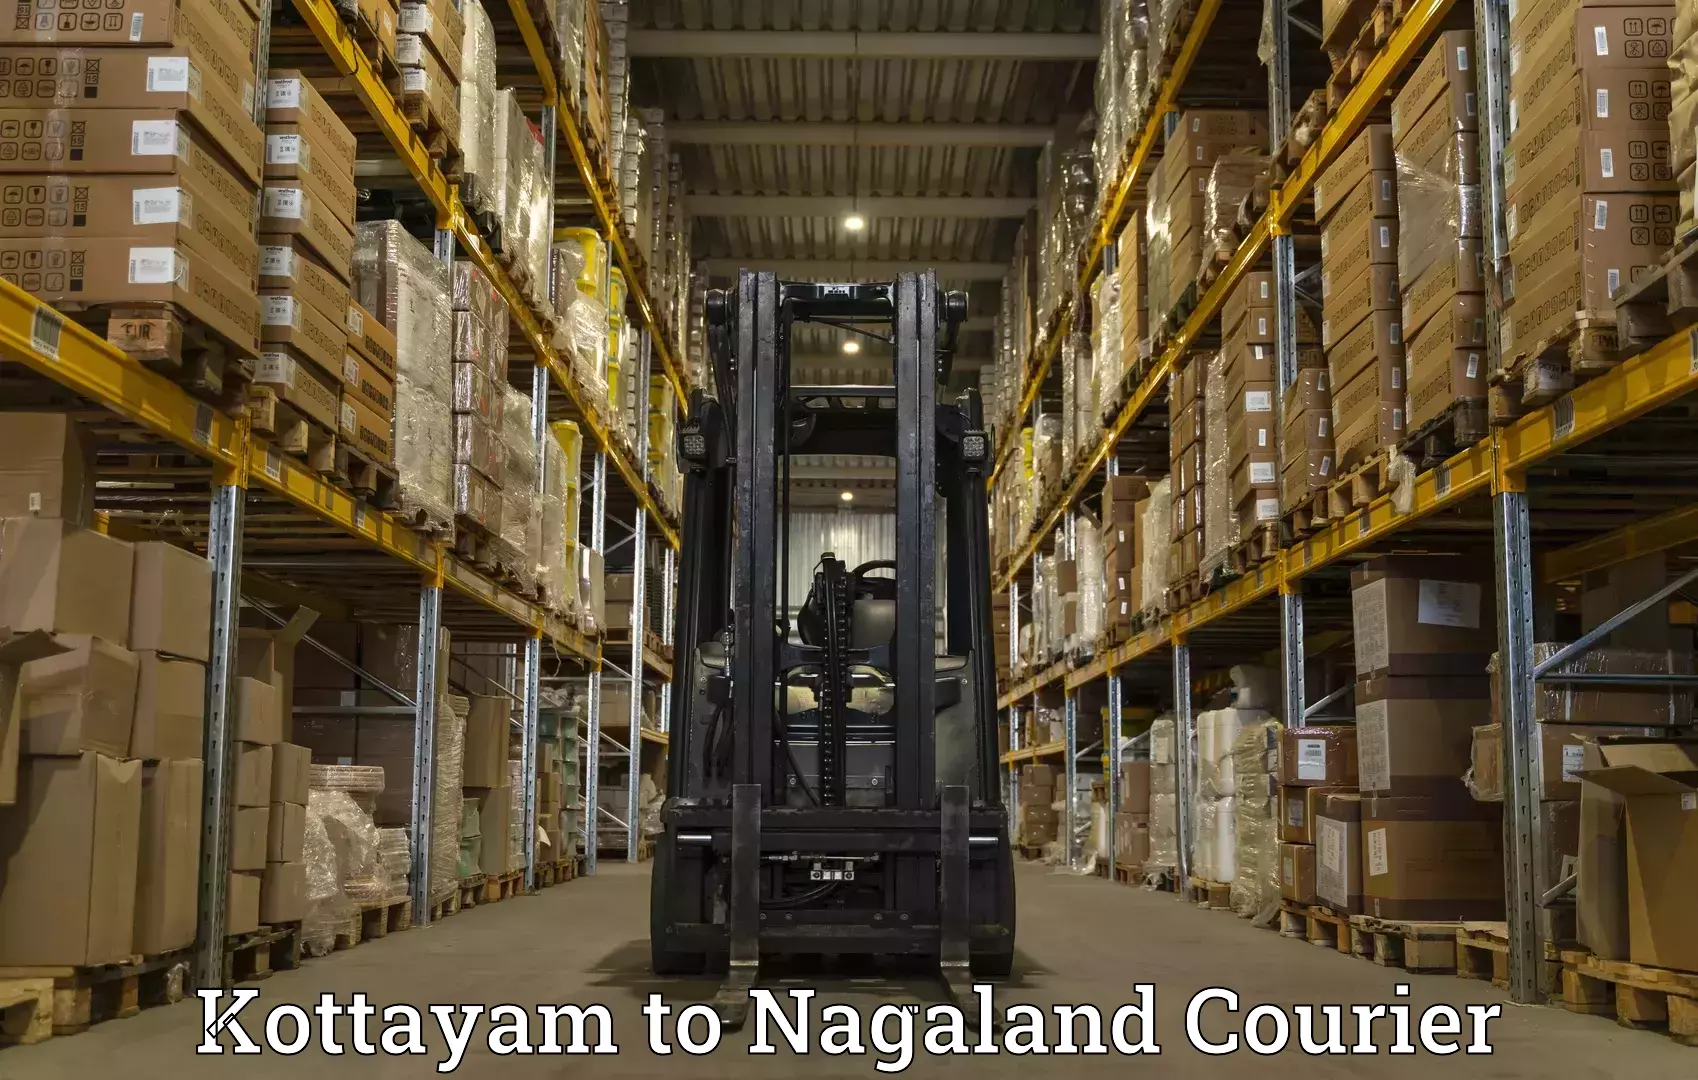 Express delivery network Kottayam to Nagaland